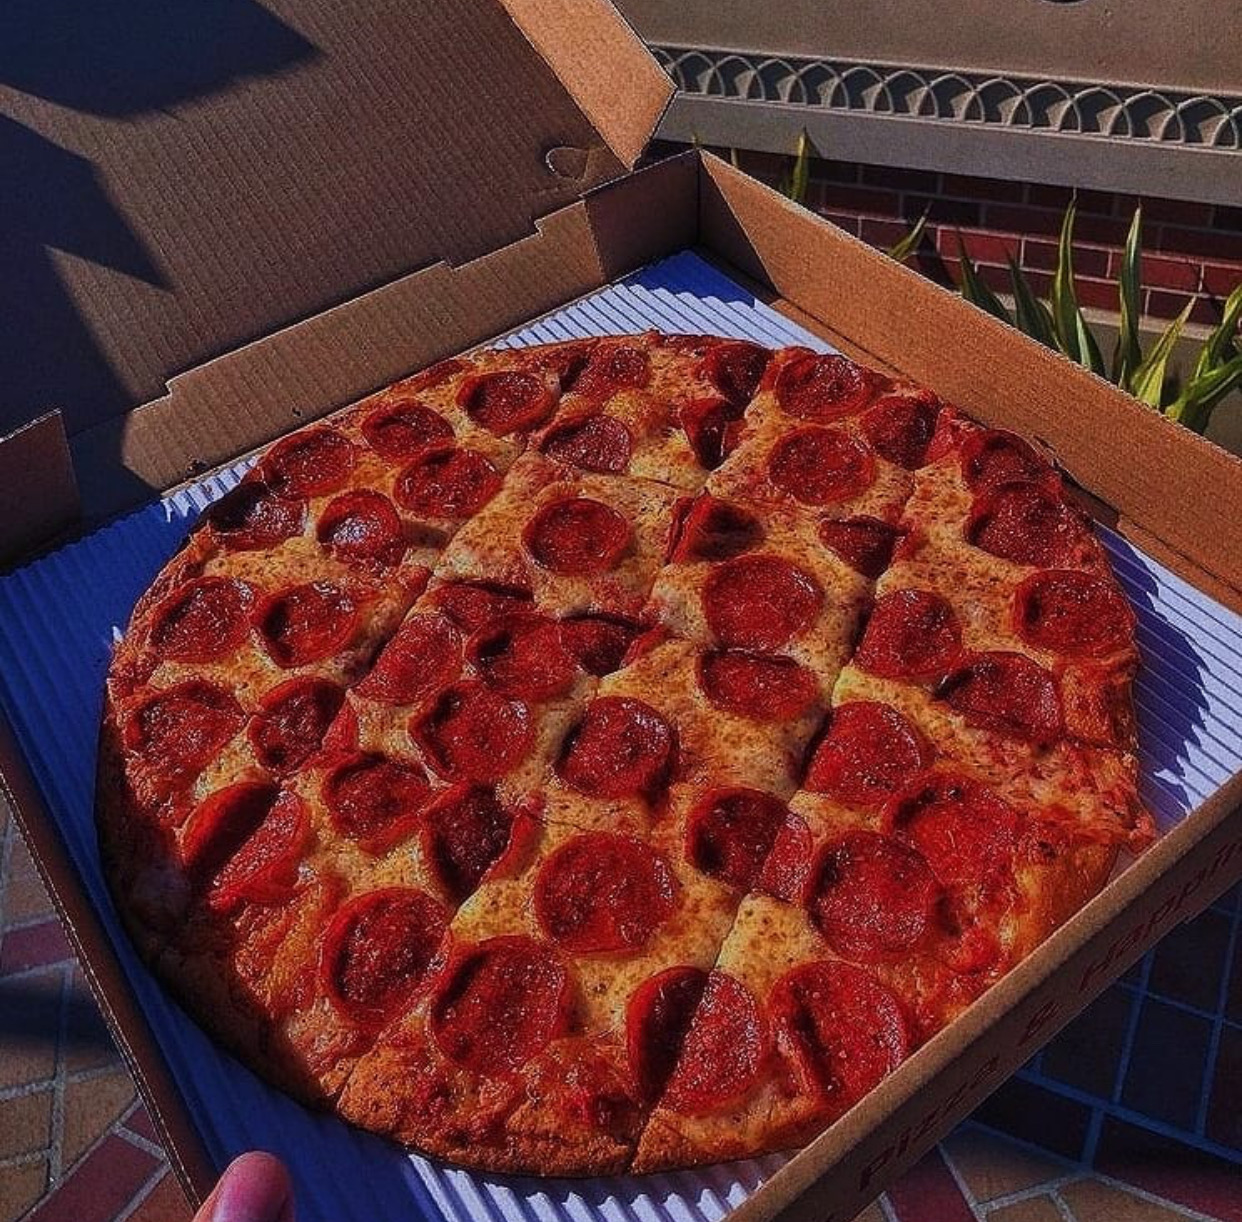 фото пиццы пепперони в коробке фото 11